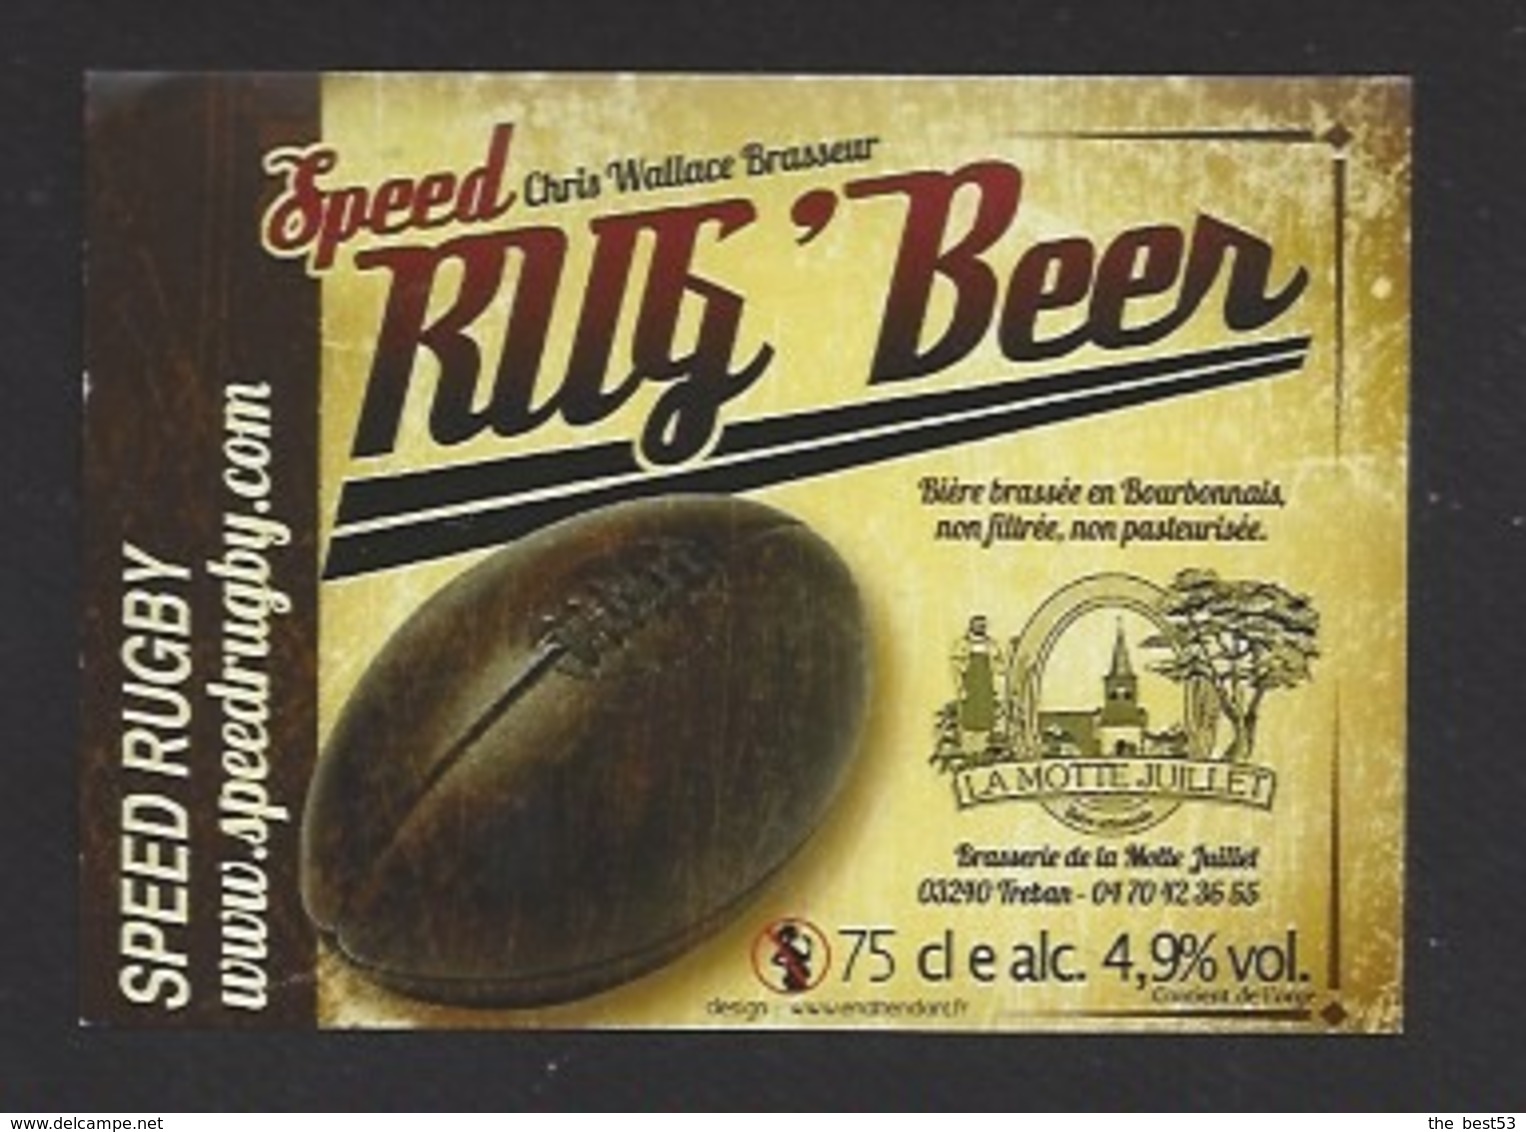 Etiquette De Bière  -  Rug'Beer  -  Speed Rgby -  Brasserie La Motte Juillet à Tréban   (03) - Beer